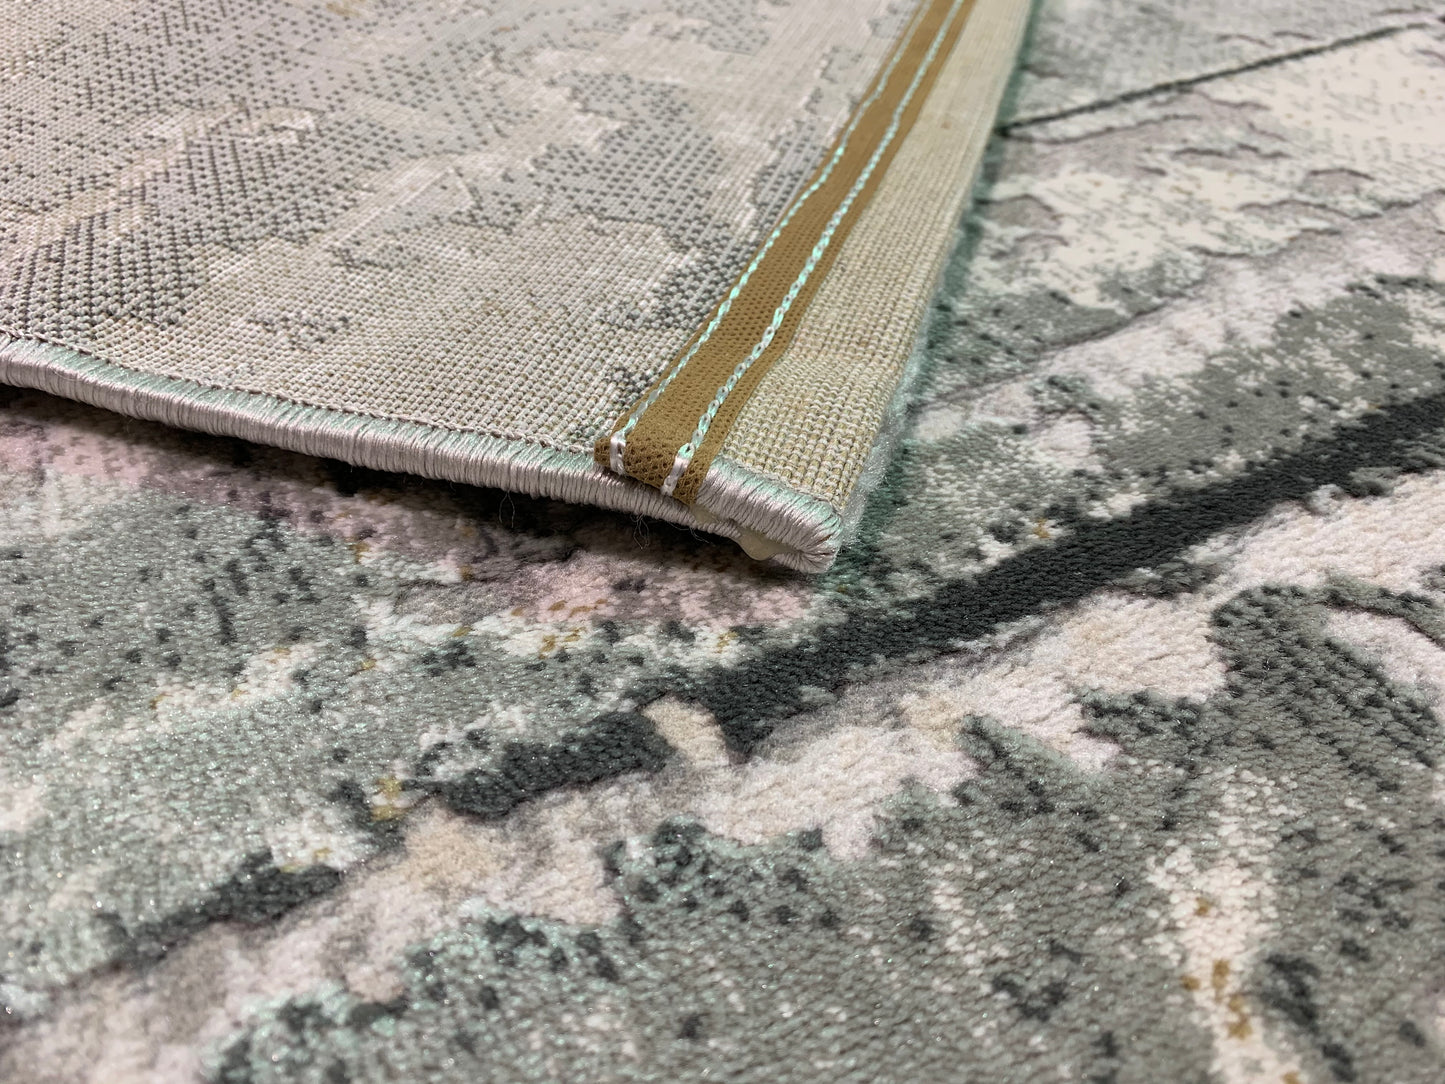 SP-101: Synthetic fiber rug